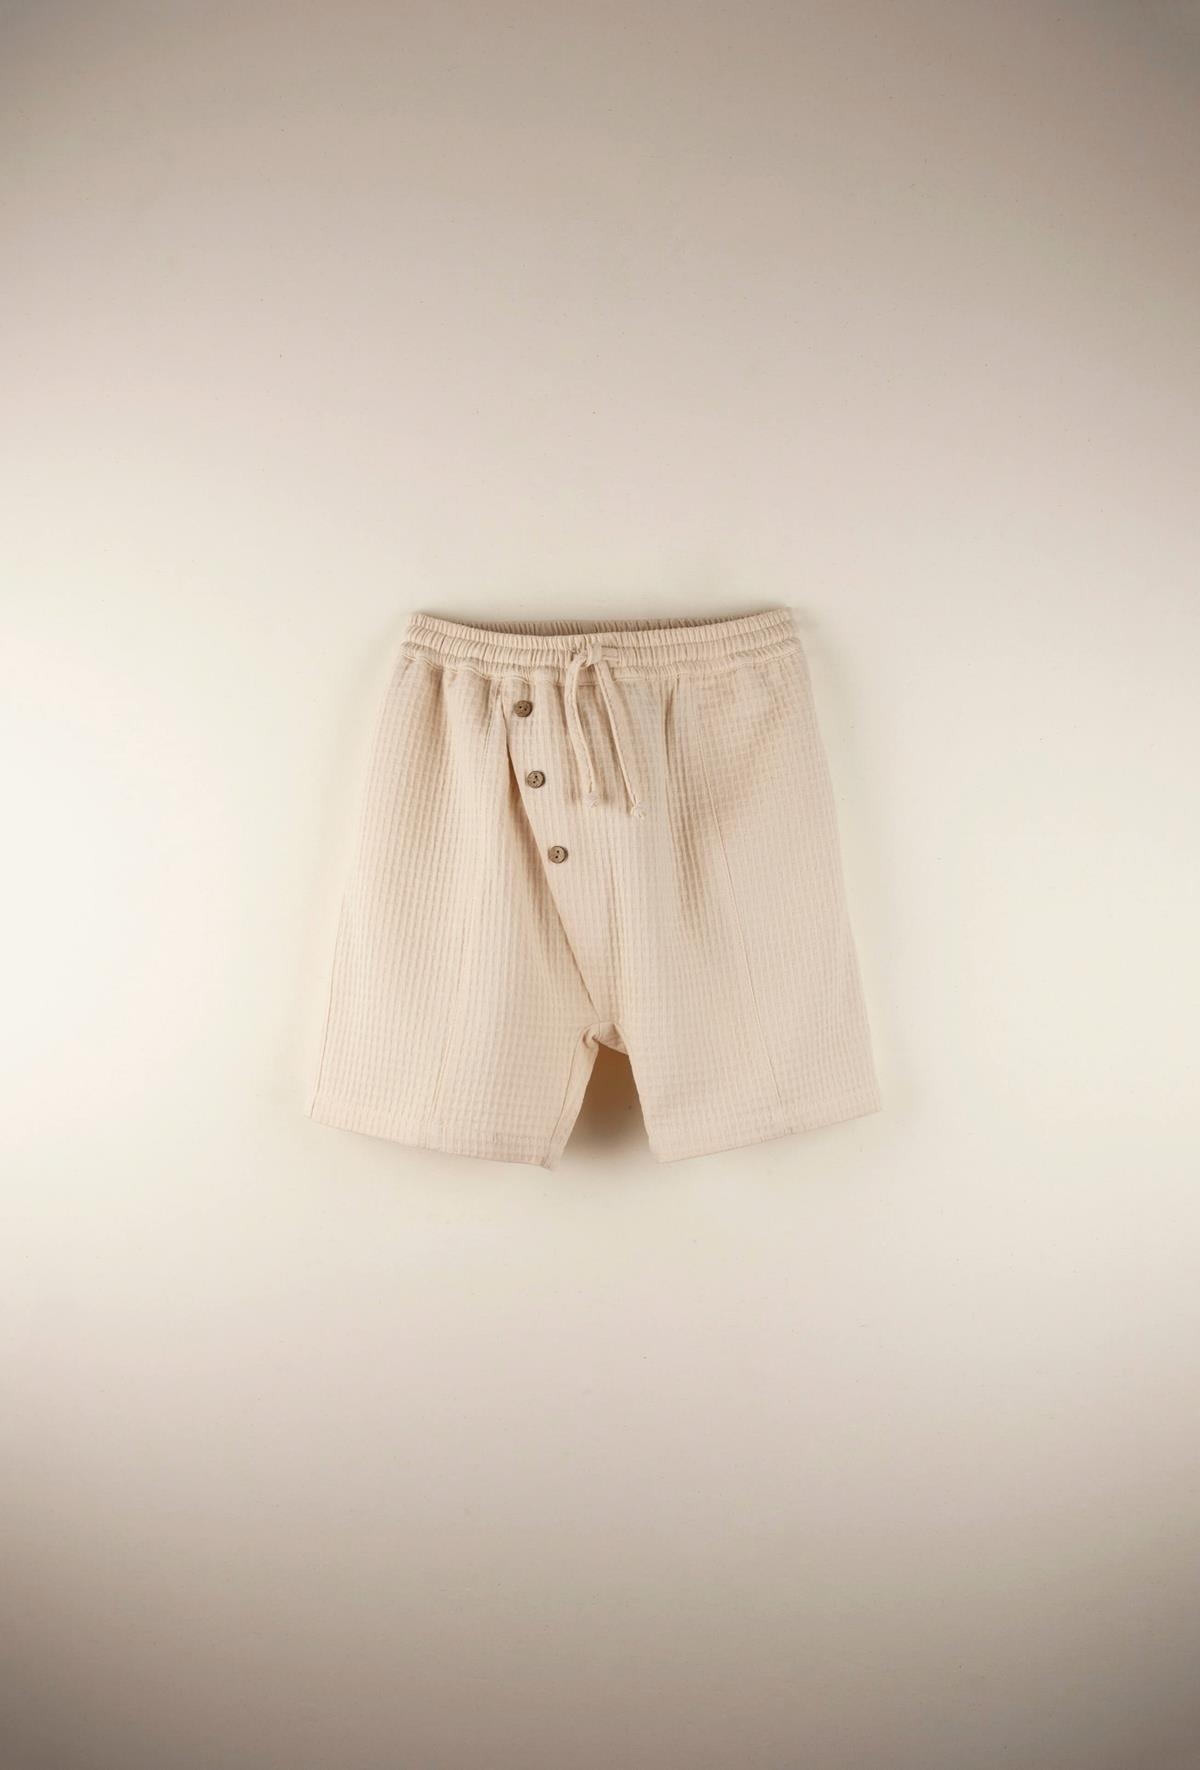 Mod.13.5 Beige organic Bermuda shorts | SS22 Mod.13.5 Beige organic Bermuda shorts | 1